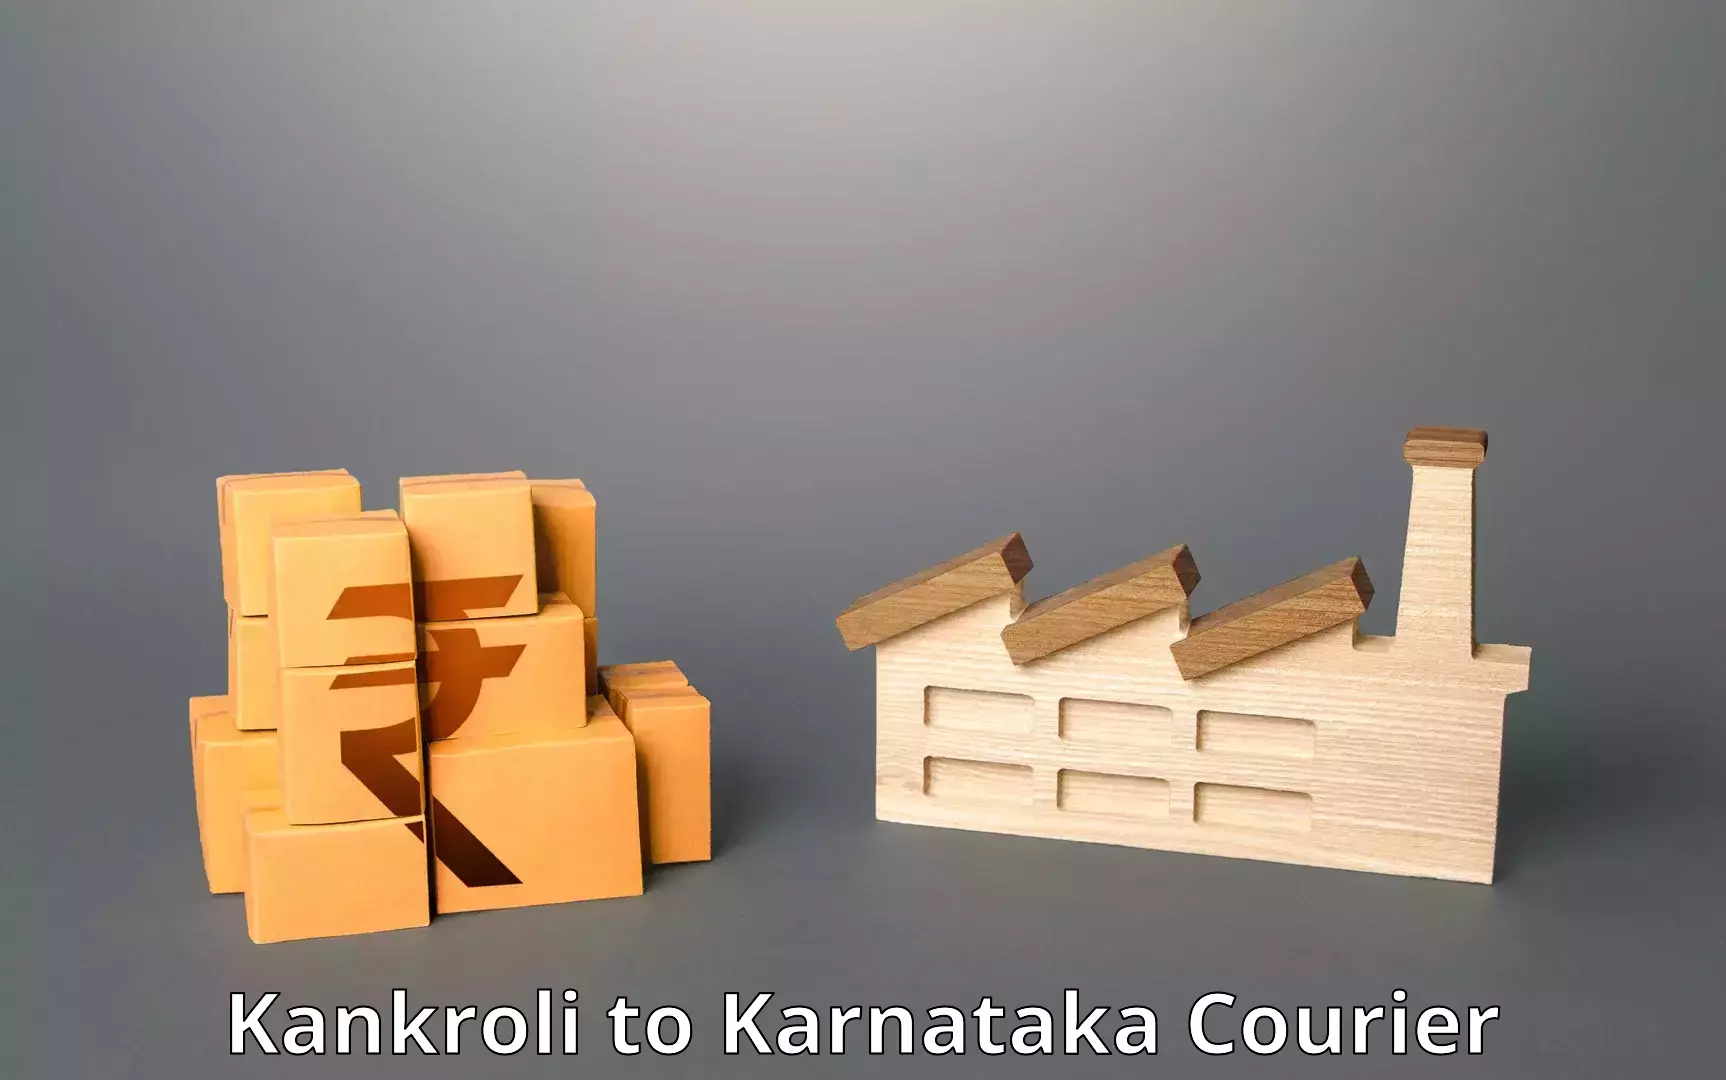 Tech-enabled shipping Kankroli to Karnataka